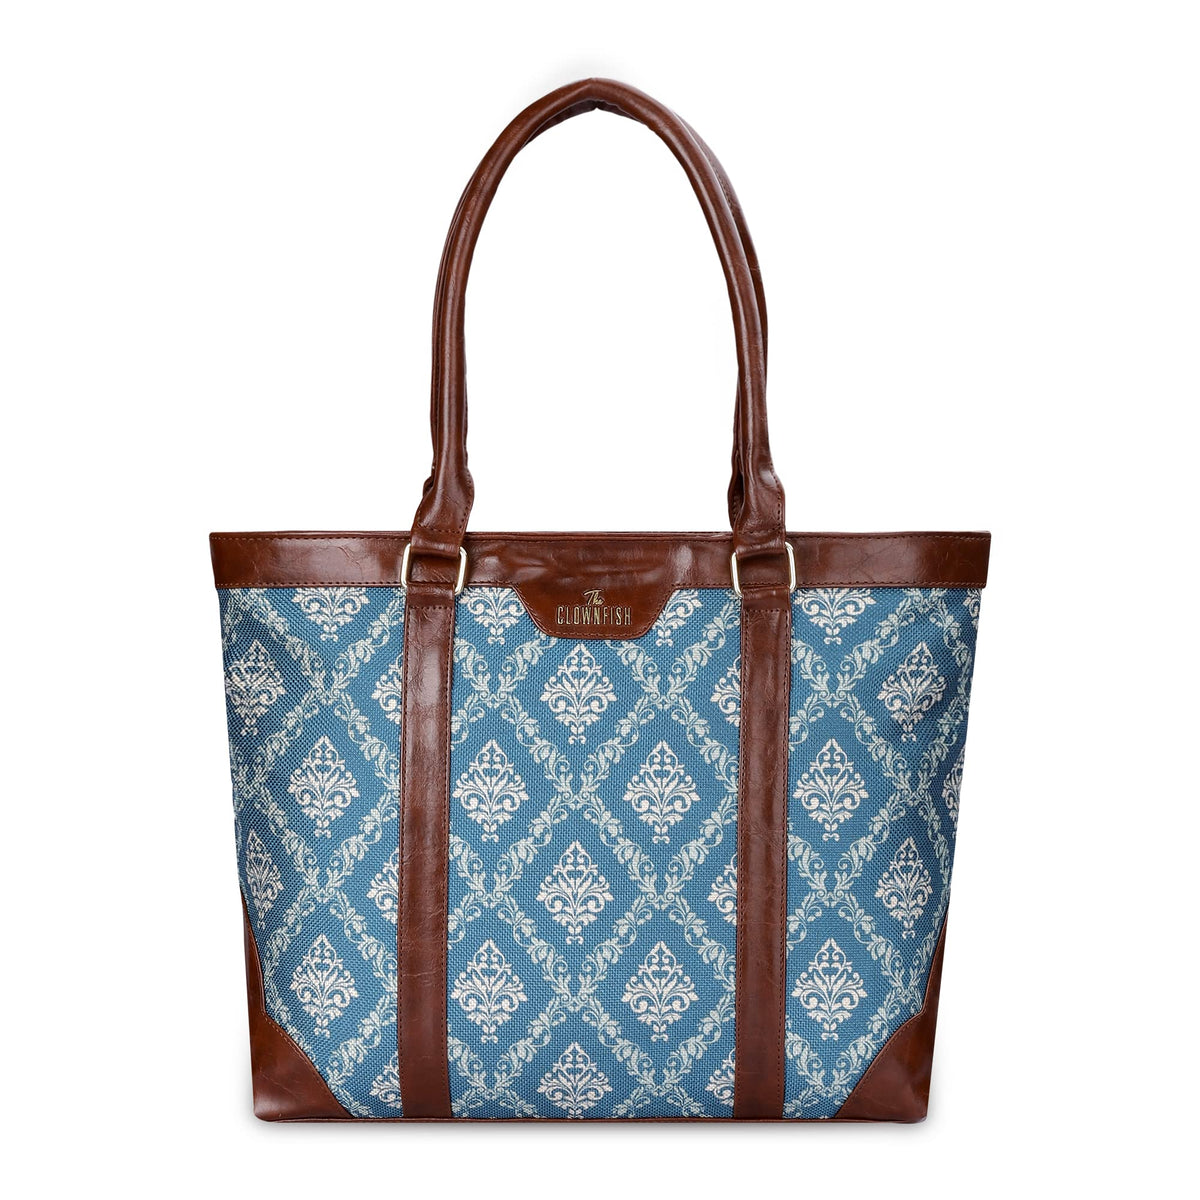 THE CLOWNFISH Miranda Series 15.6 inch Laptop Bag For Women Printed Handicraft Fabric & Faux Leather Office Bag Briefcase Hand Messenger bag Tote Shoulder Bag (Dark Blue)